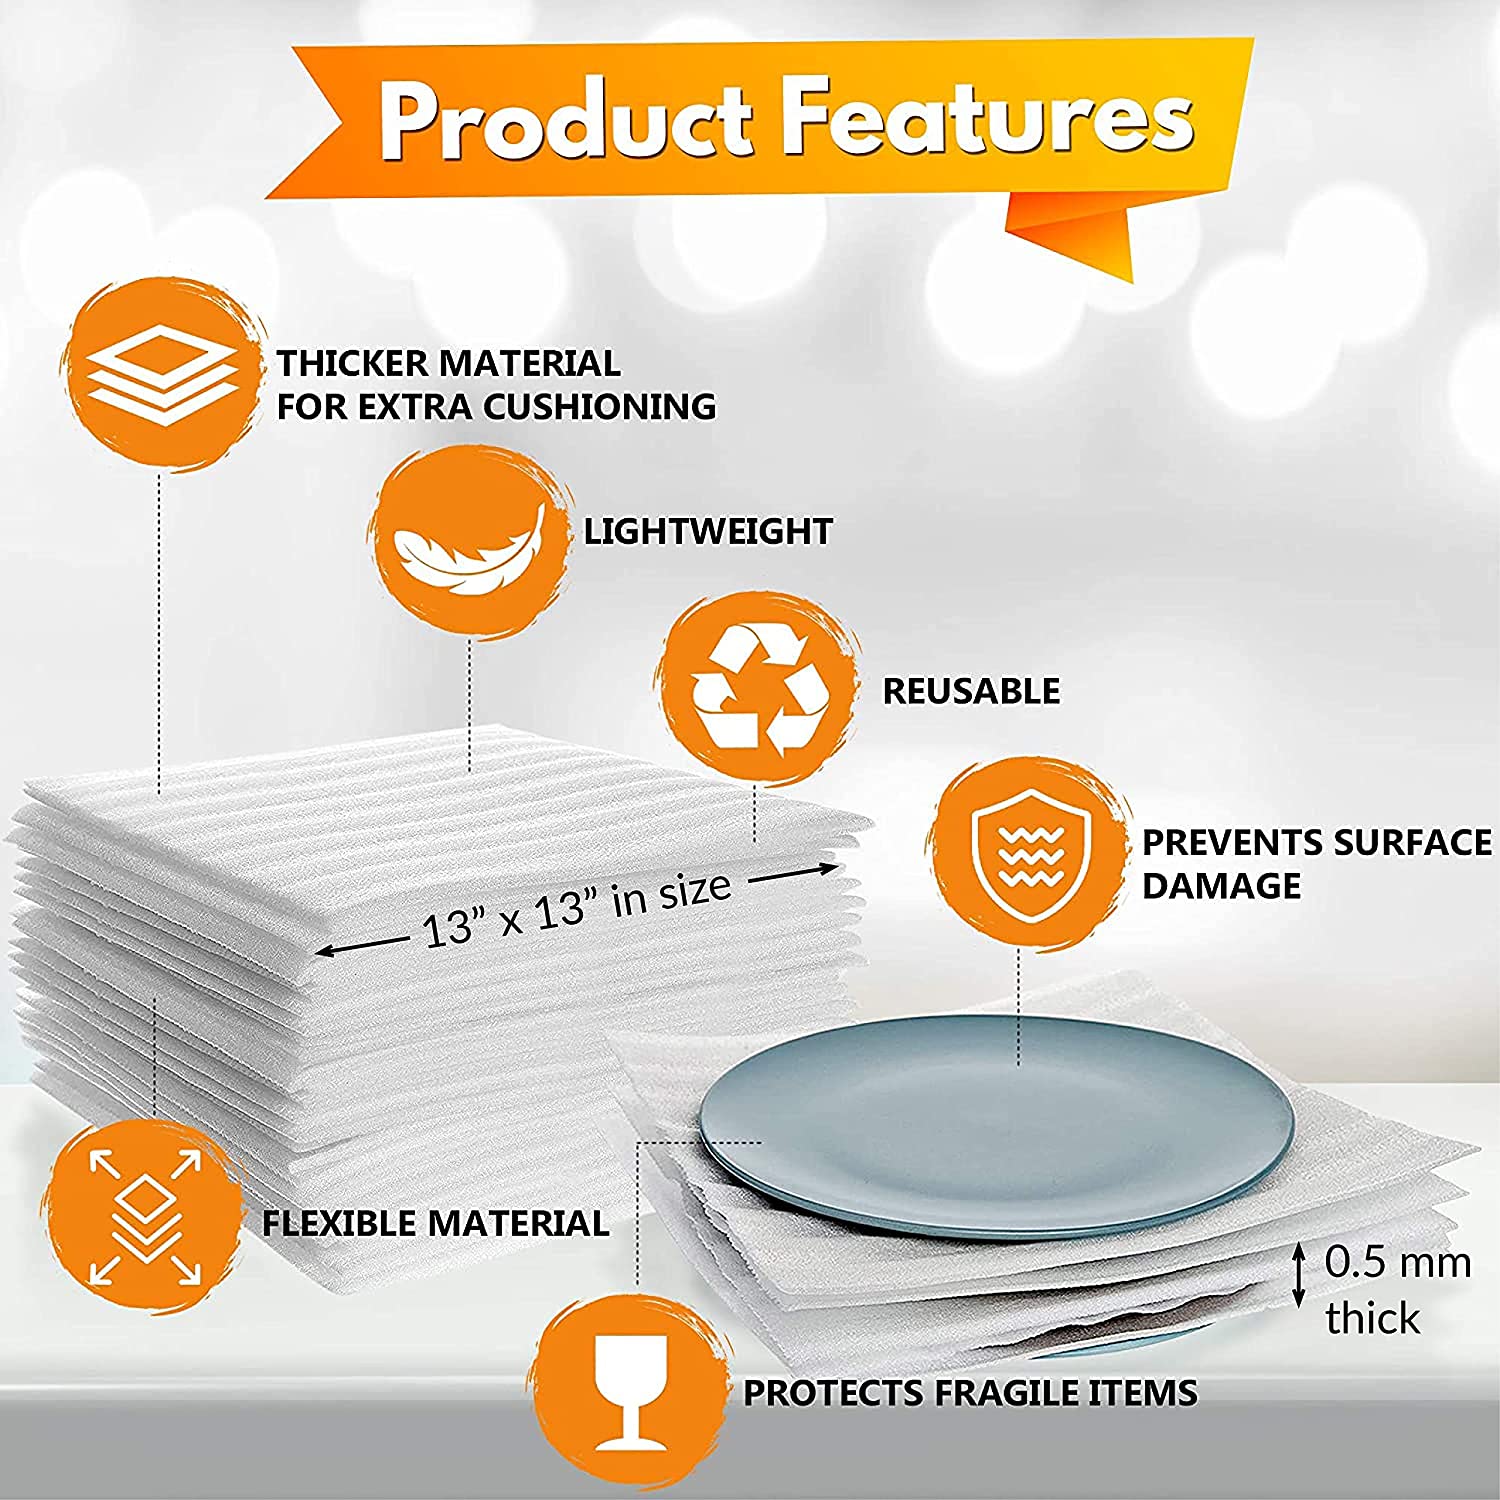 Foam Sheet Product Feature